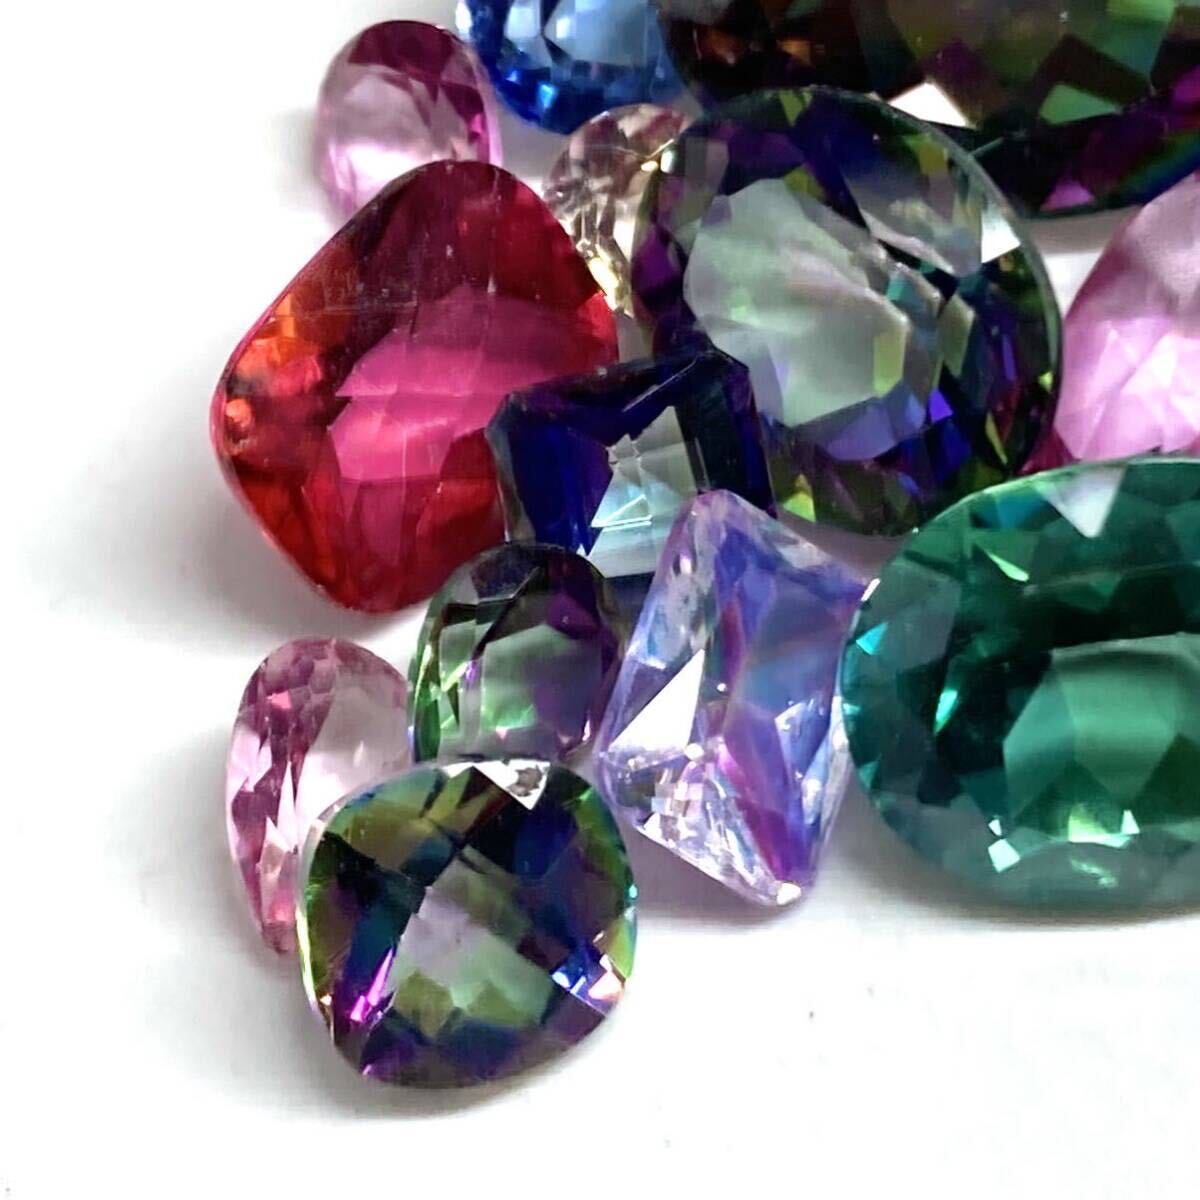 # Mystic topaz / quartz . summarize #m approximately 140ct/28g weight approximately loose unset jewel gem jewelry jewelry topaz topaz quartz quartz CE0